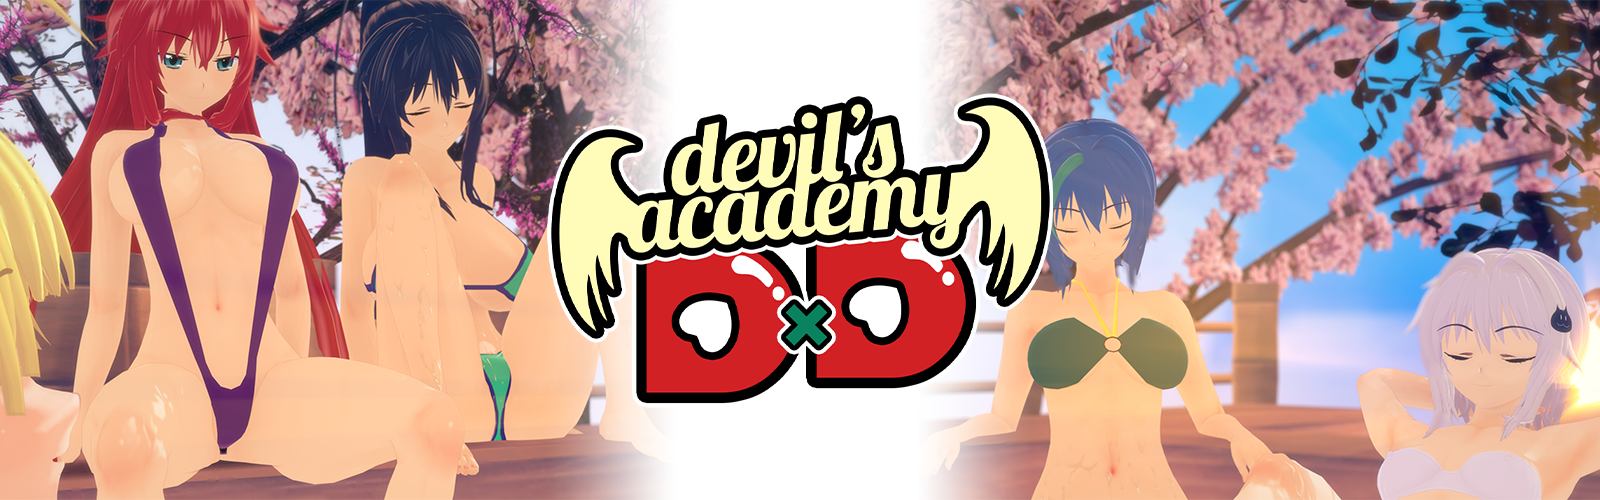 Devil's Academy DxD